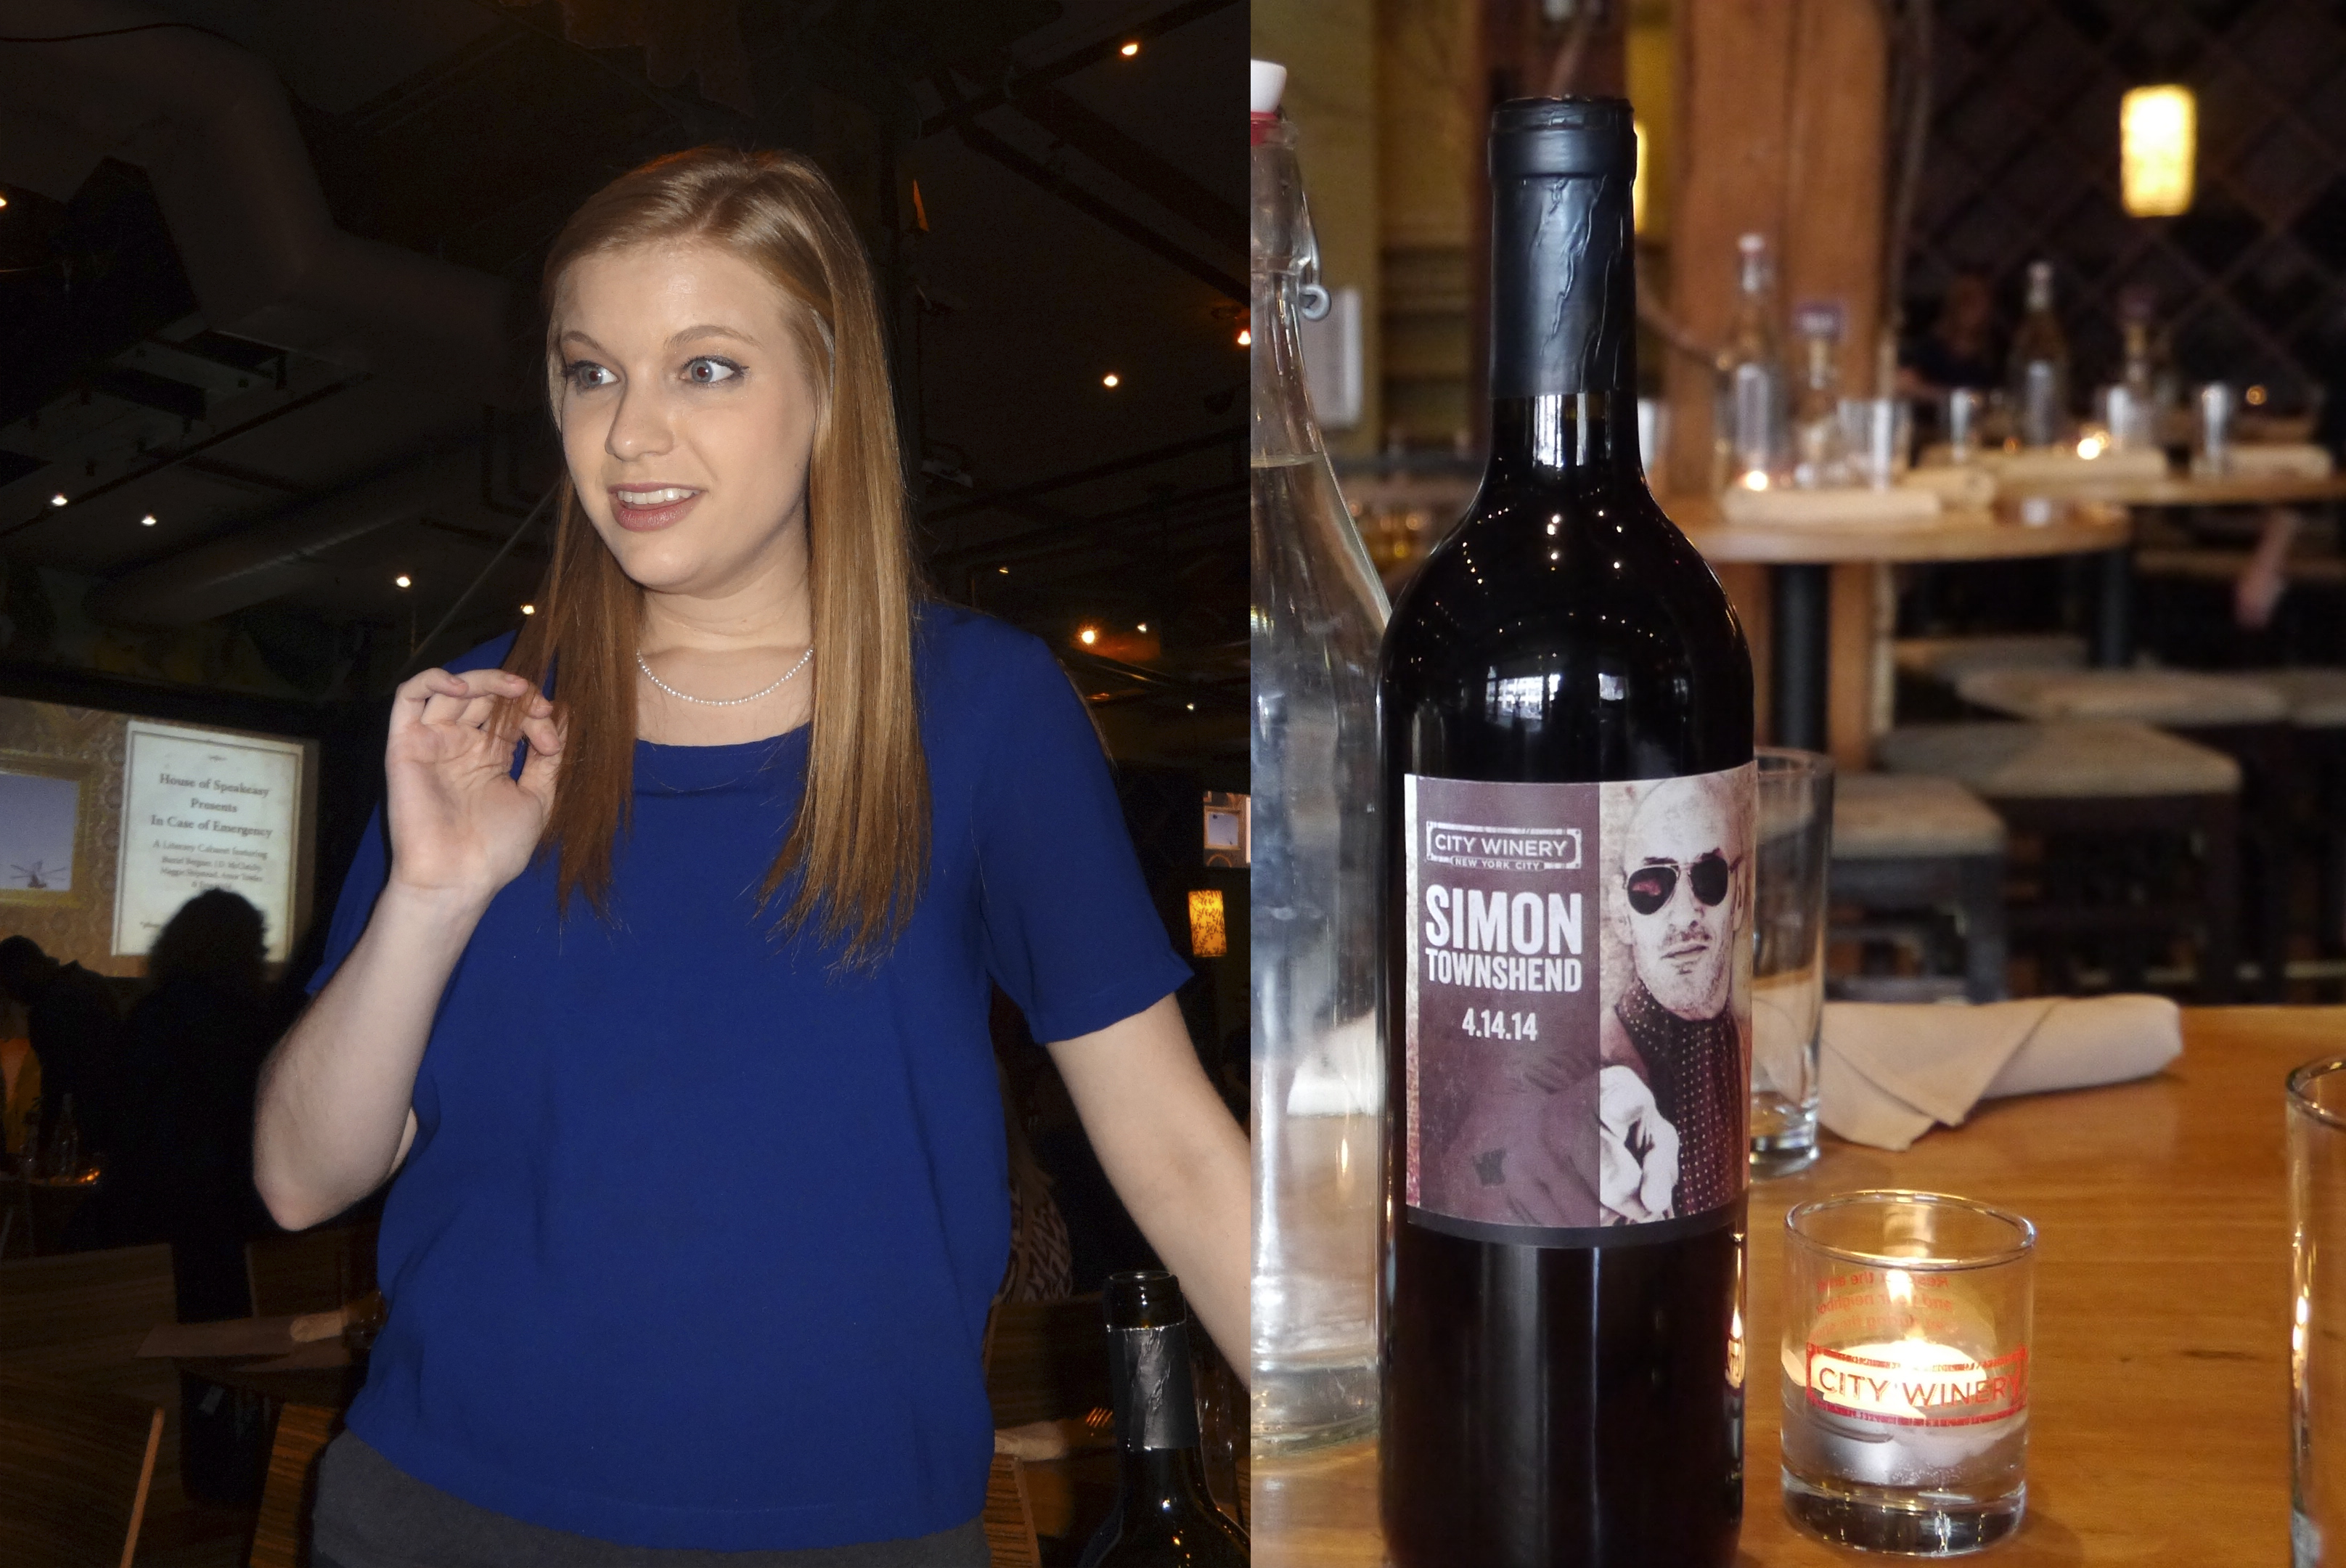 City Winery wine lady